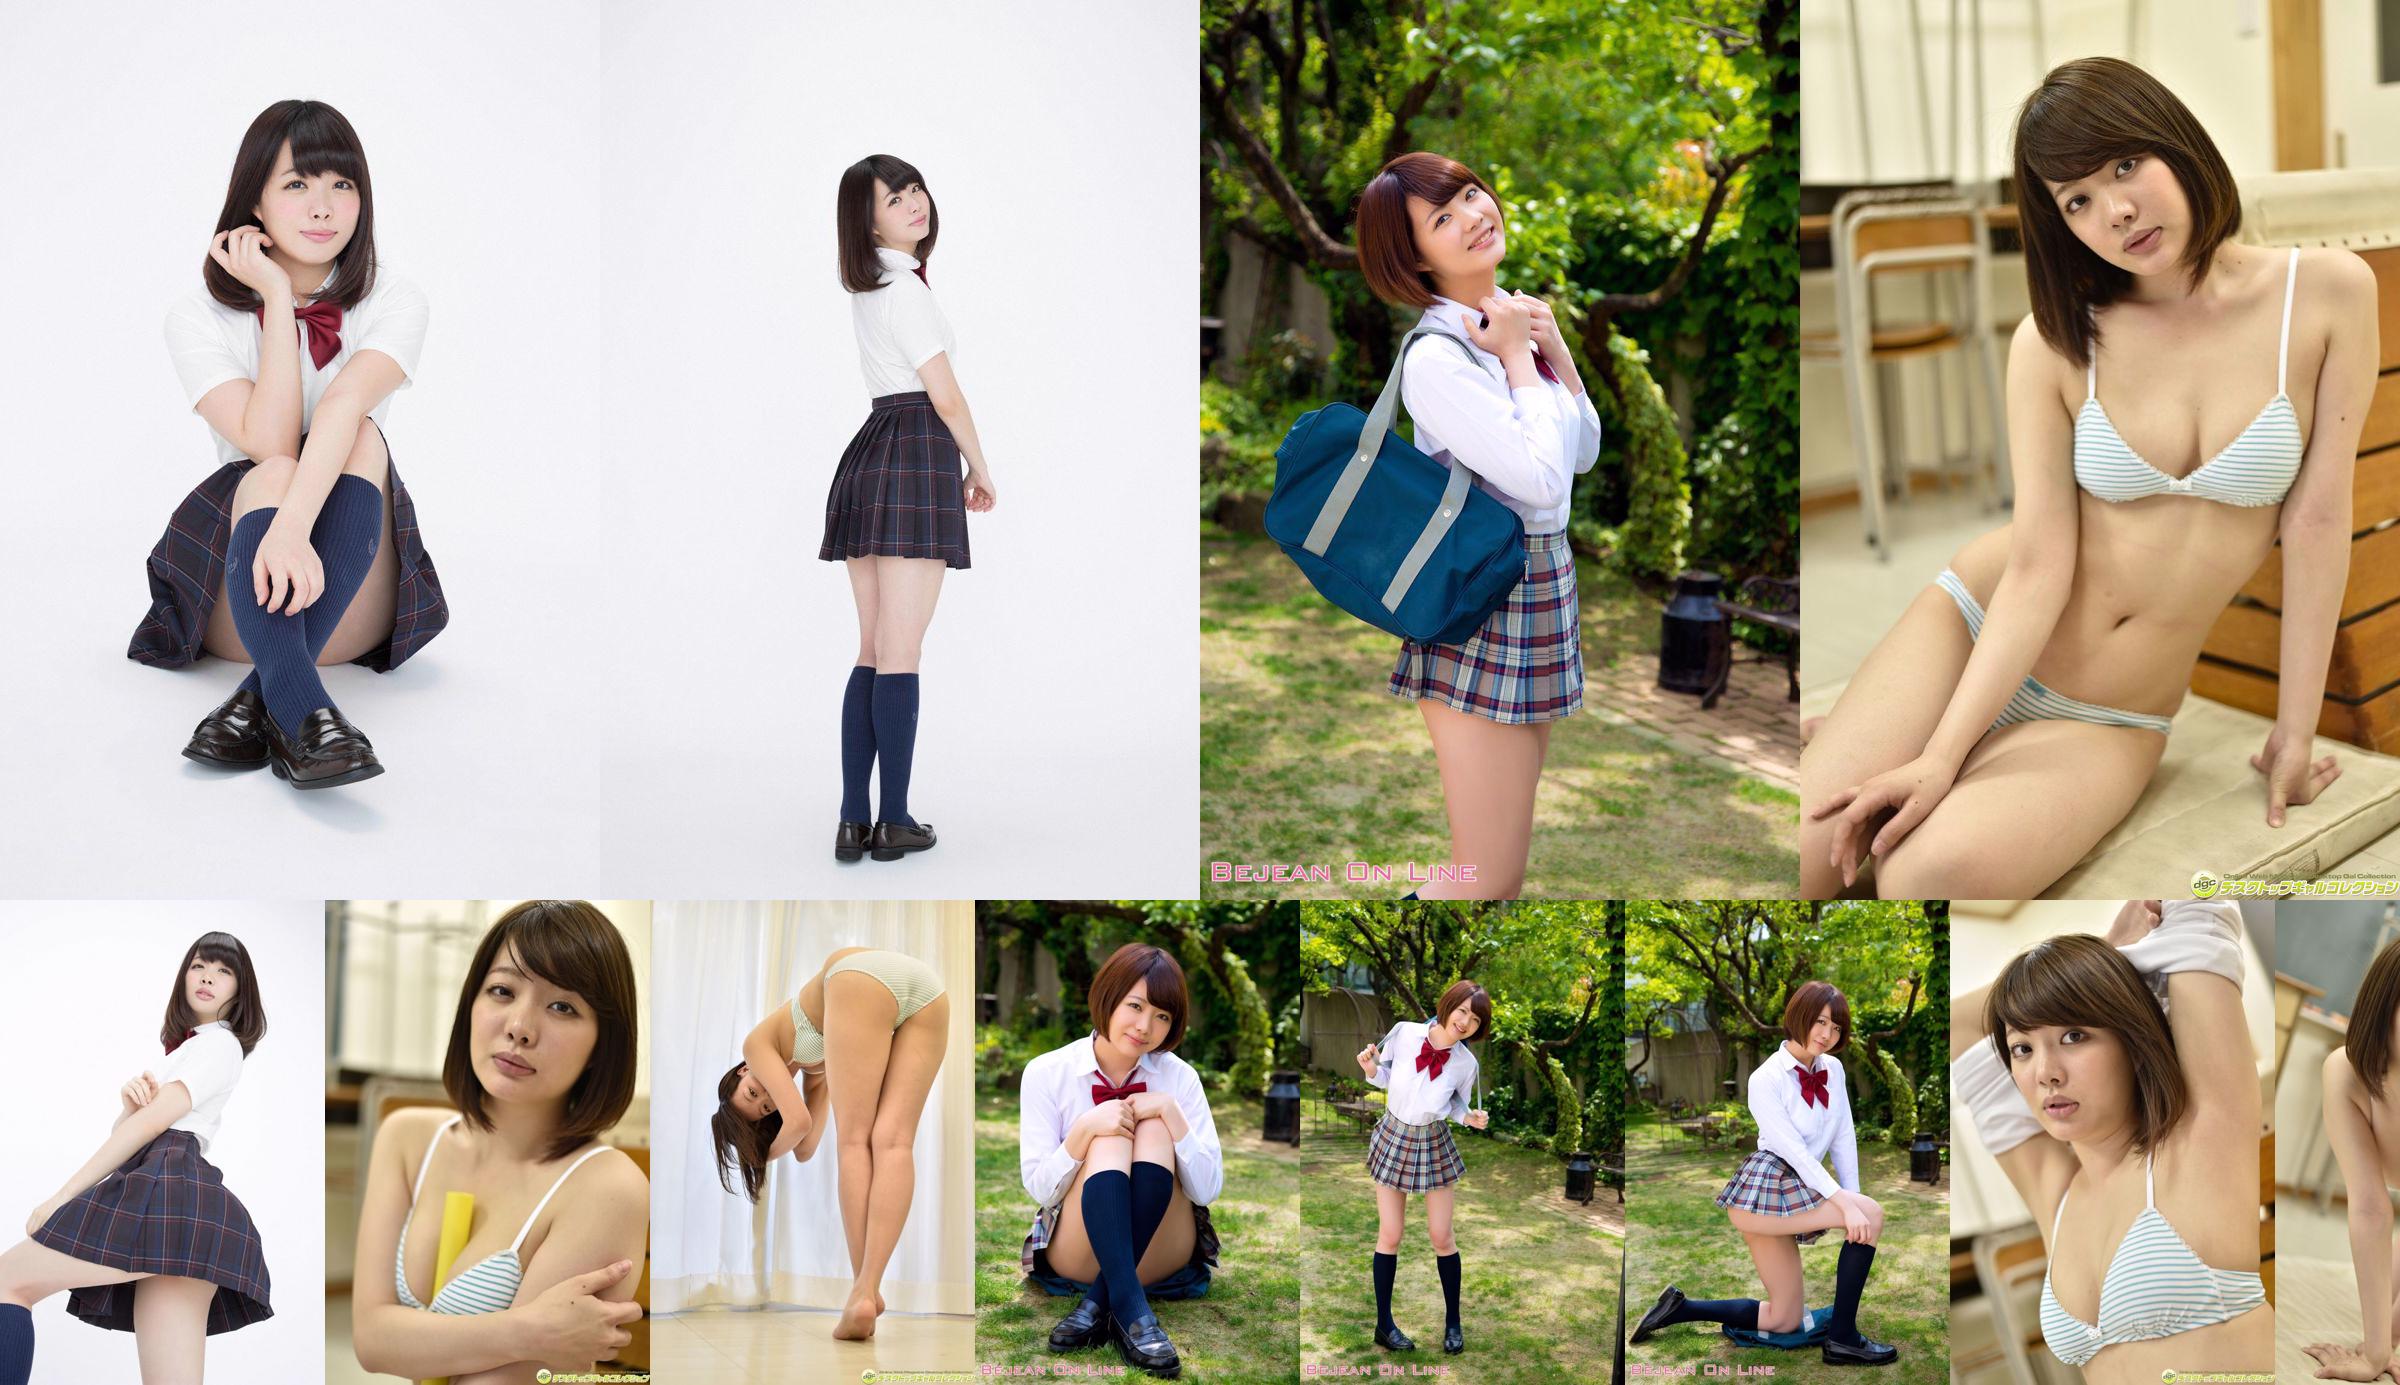 Nanami Moki << Tall + G Cup + Lori Face-chan ingeschreven! No.3d1503 Pagina 3